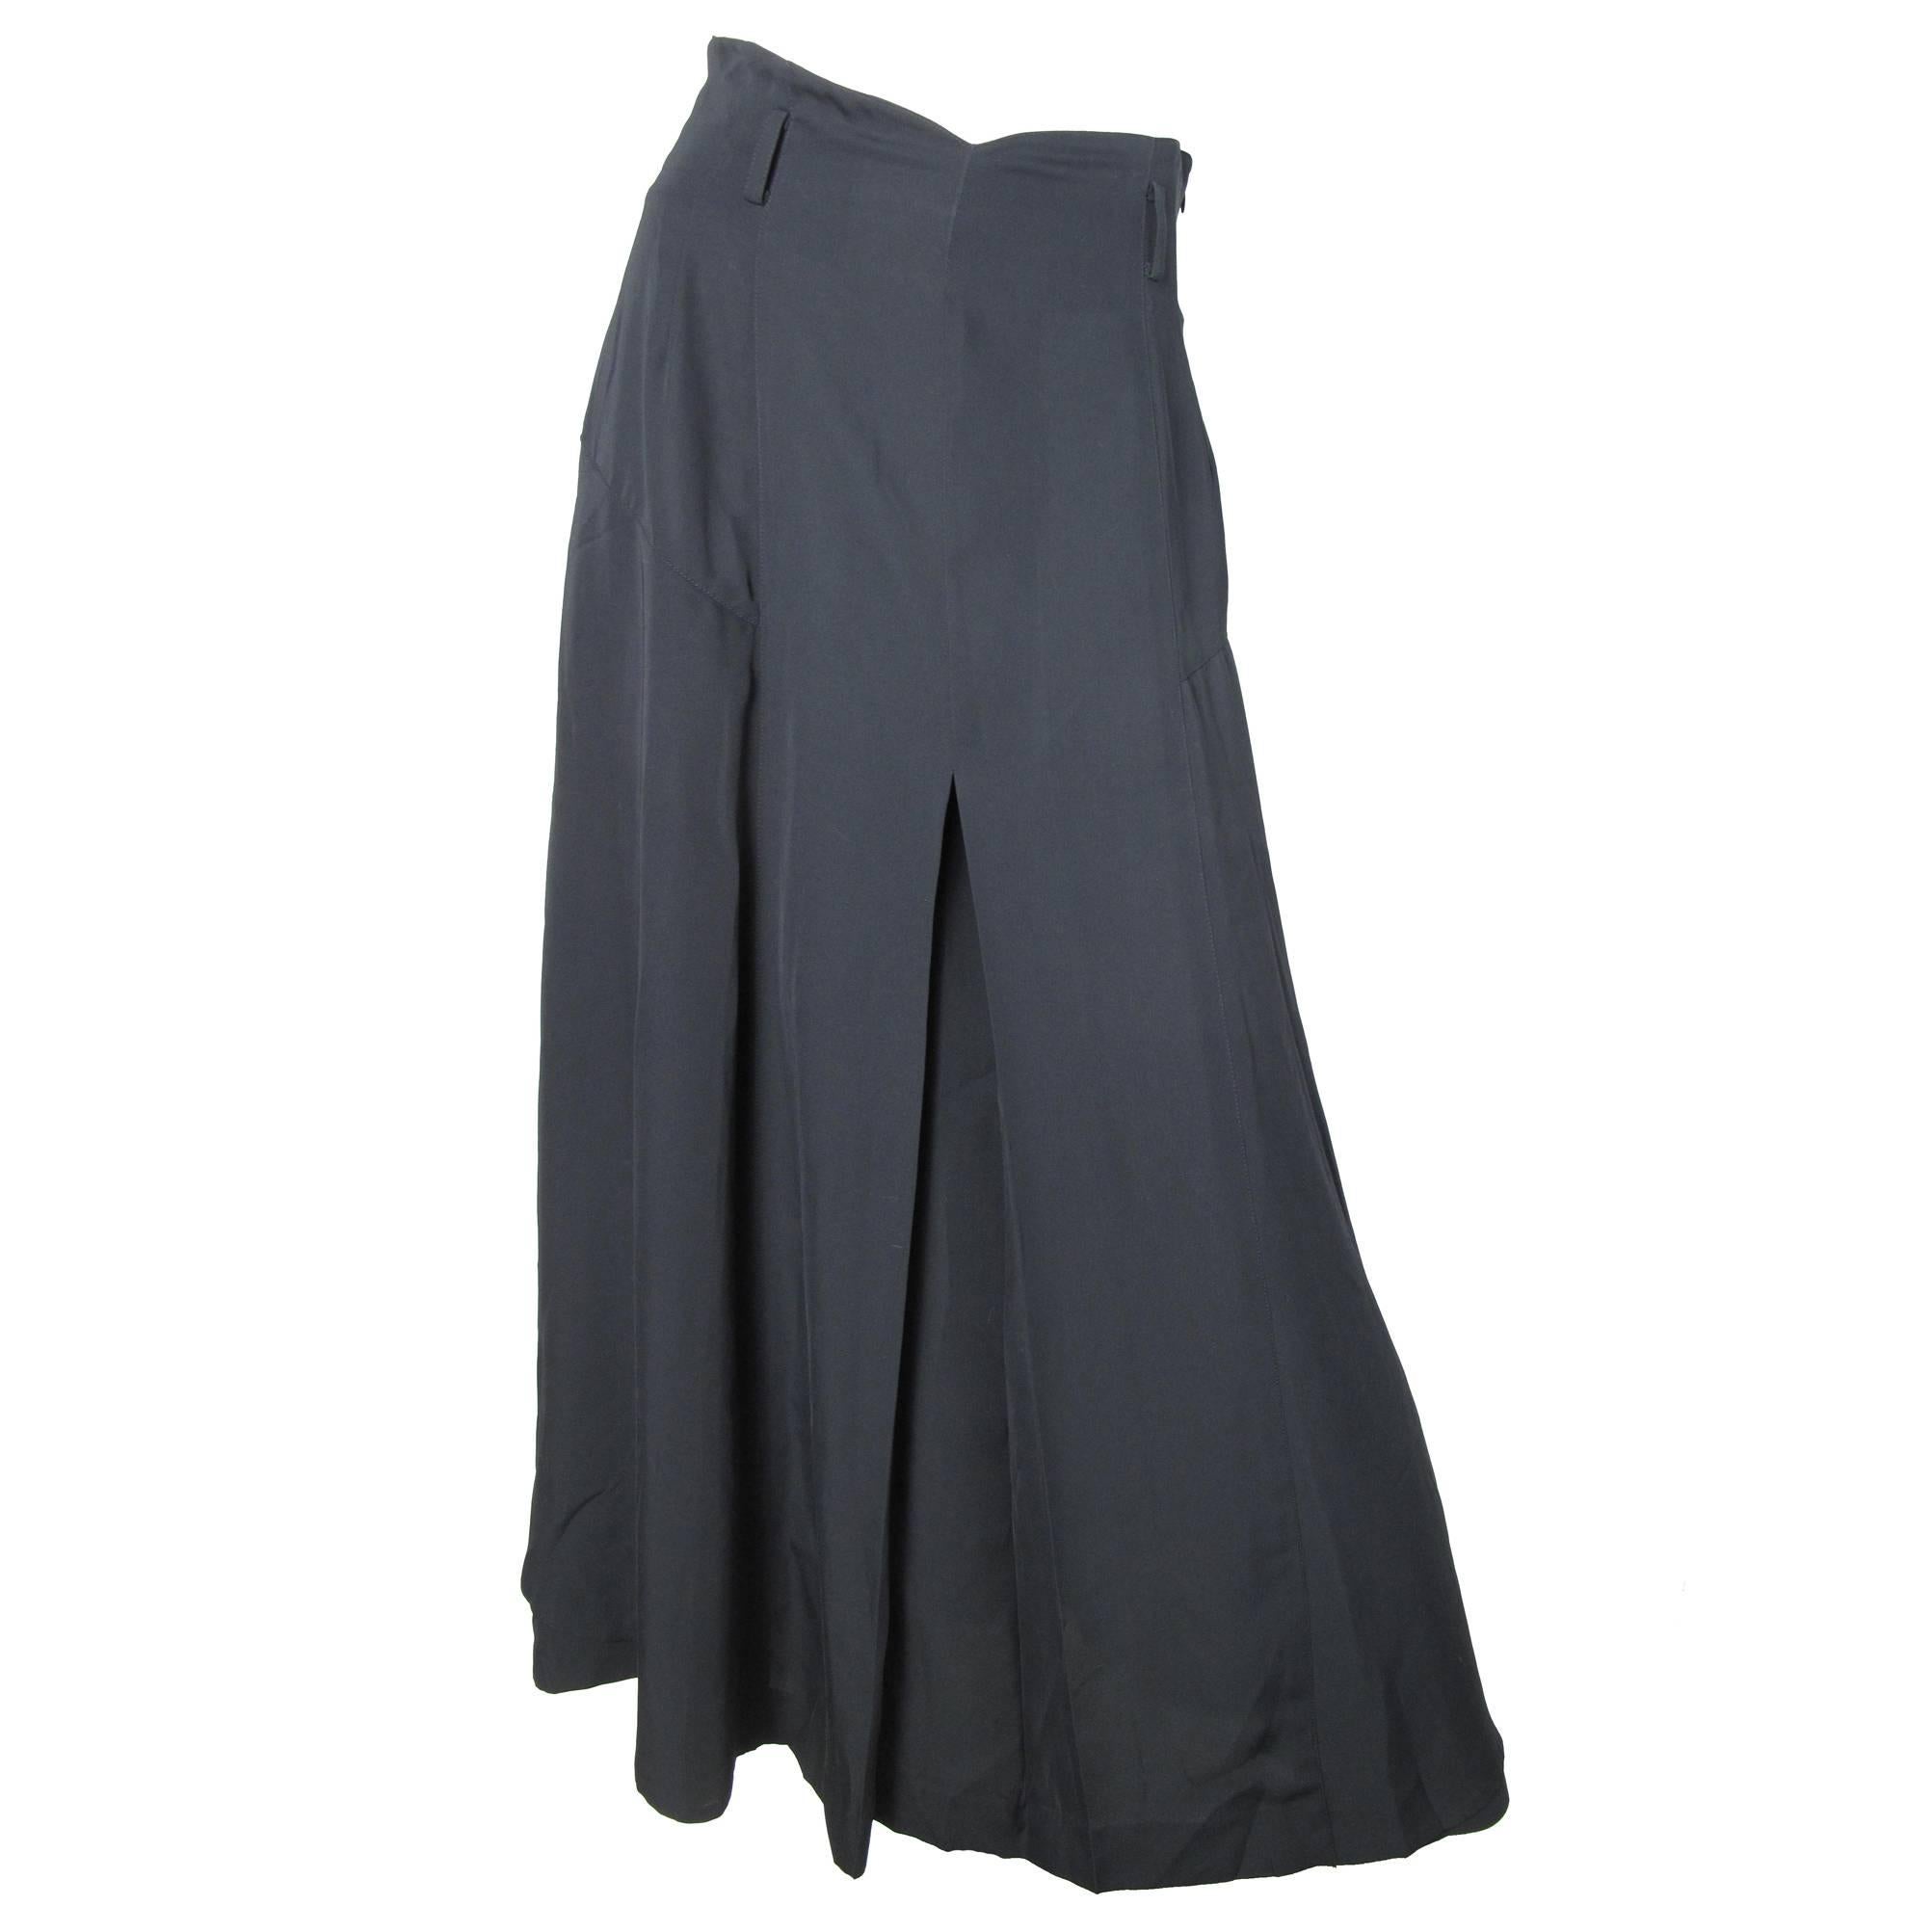 1988 Comme des Garcons black velvet skirt.  Condition: very good.  Size Medium   28